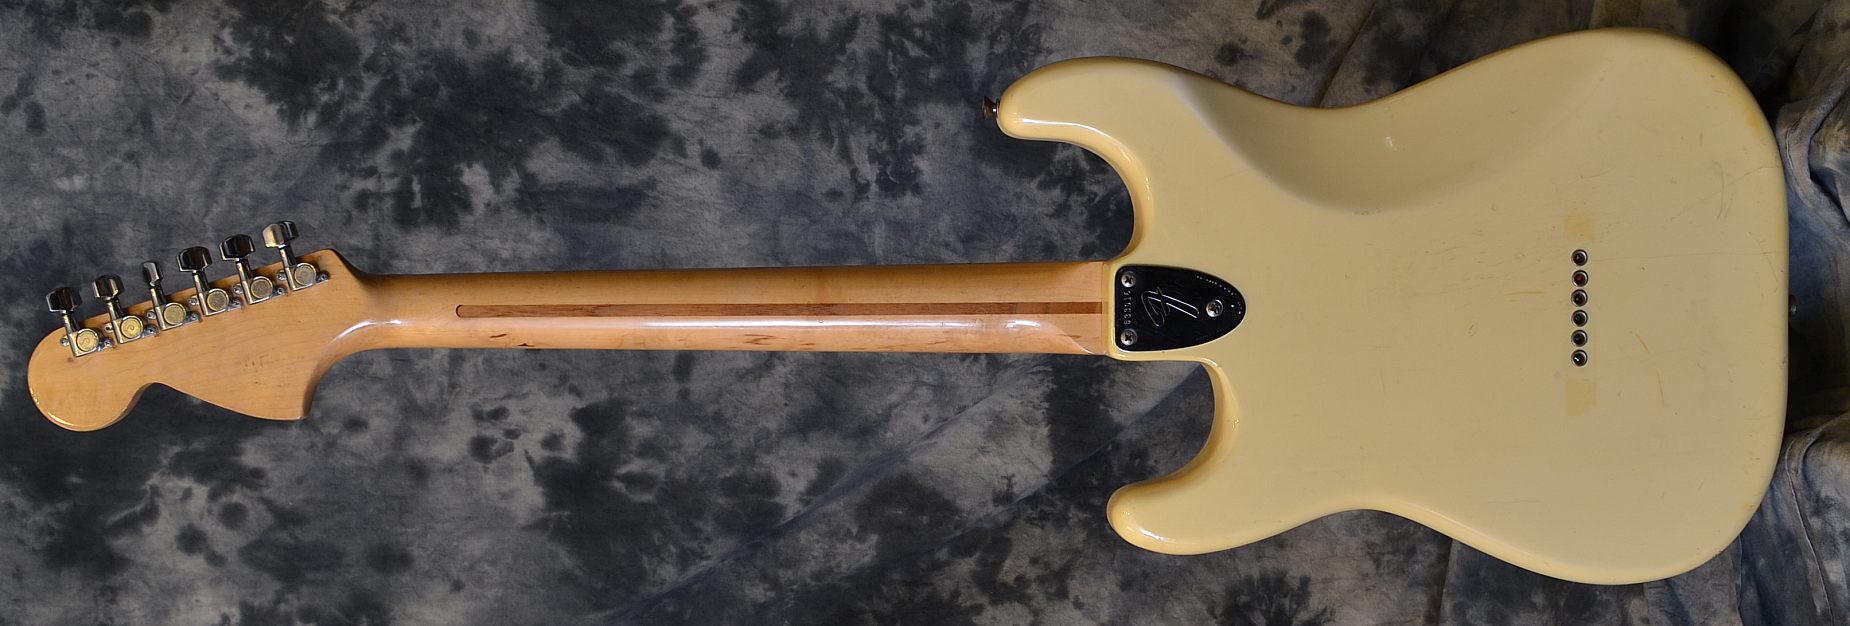 Fender Strat_Hardtail_1973(C)_back